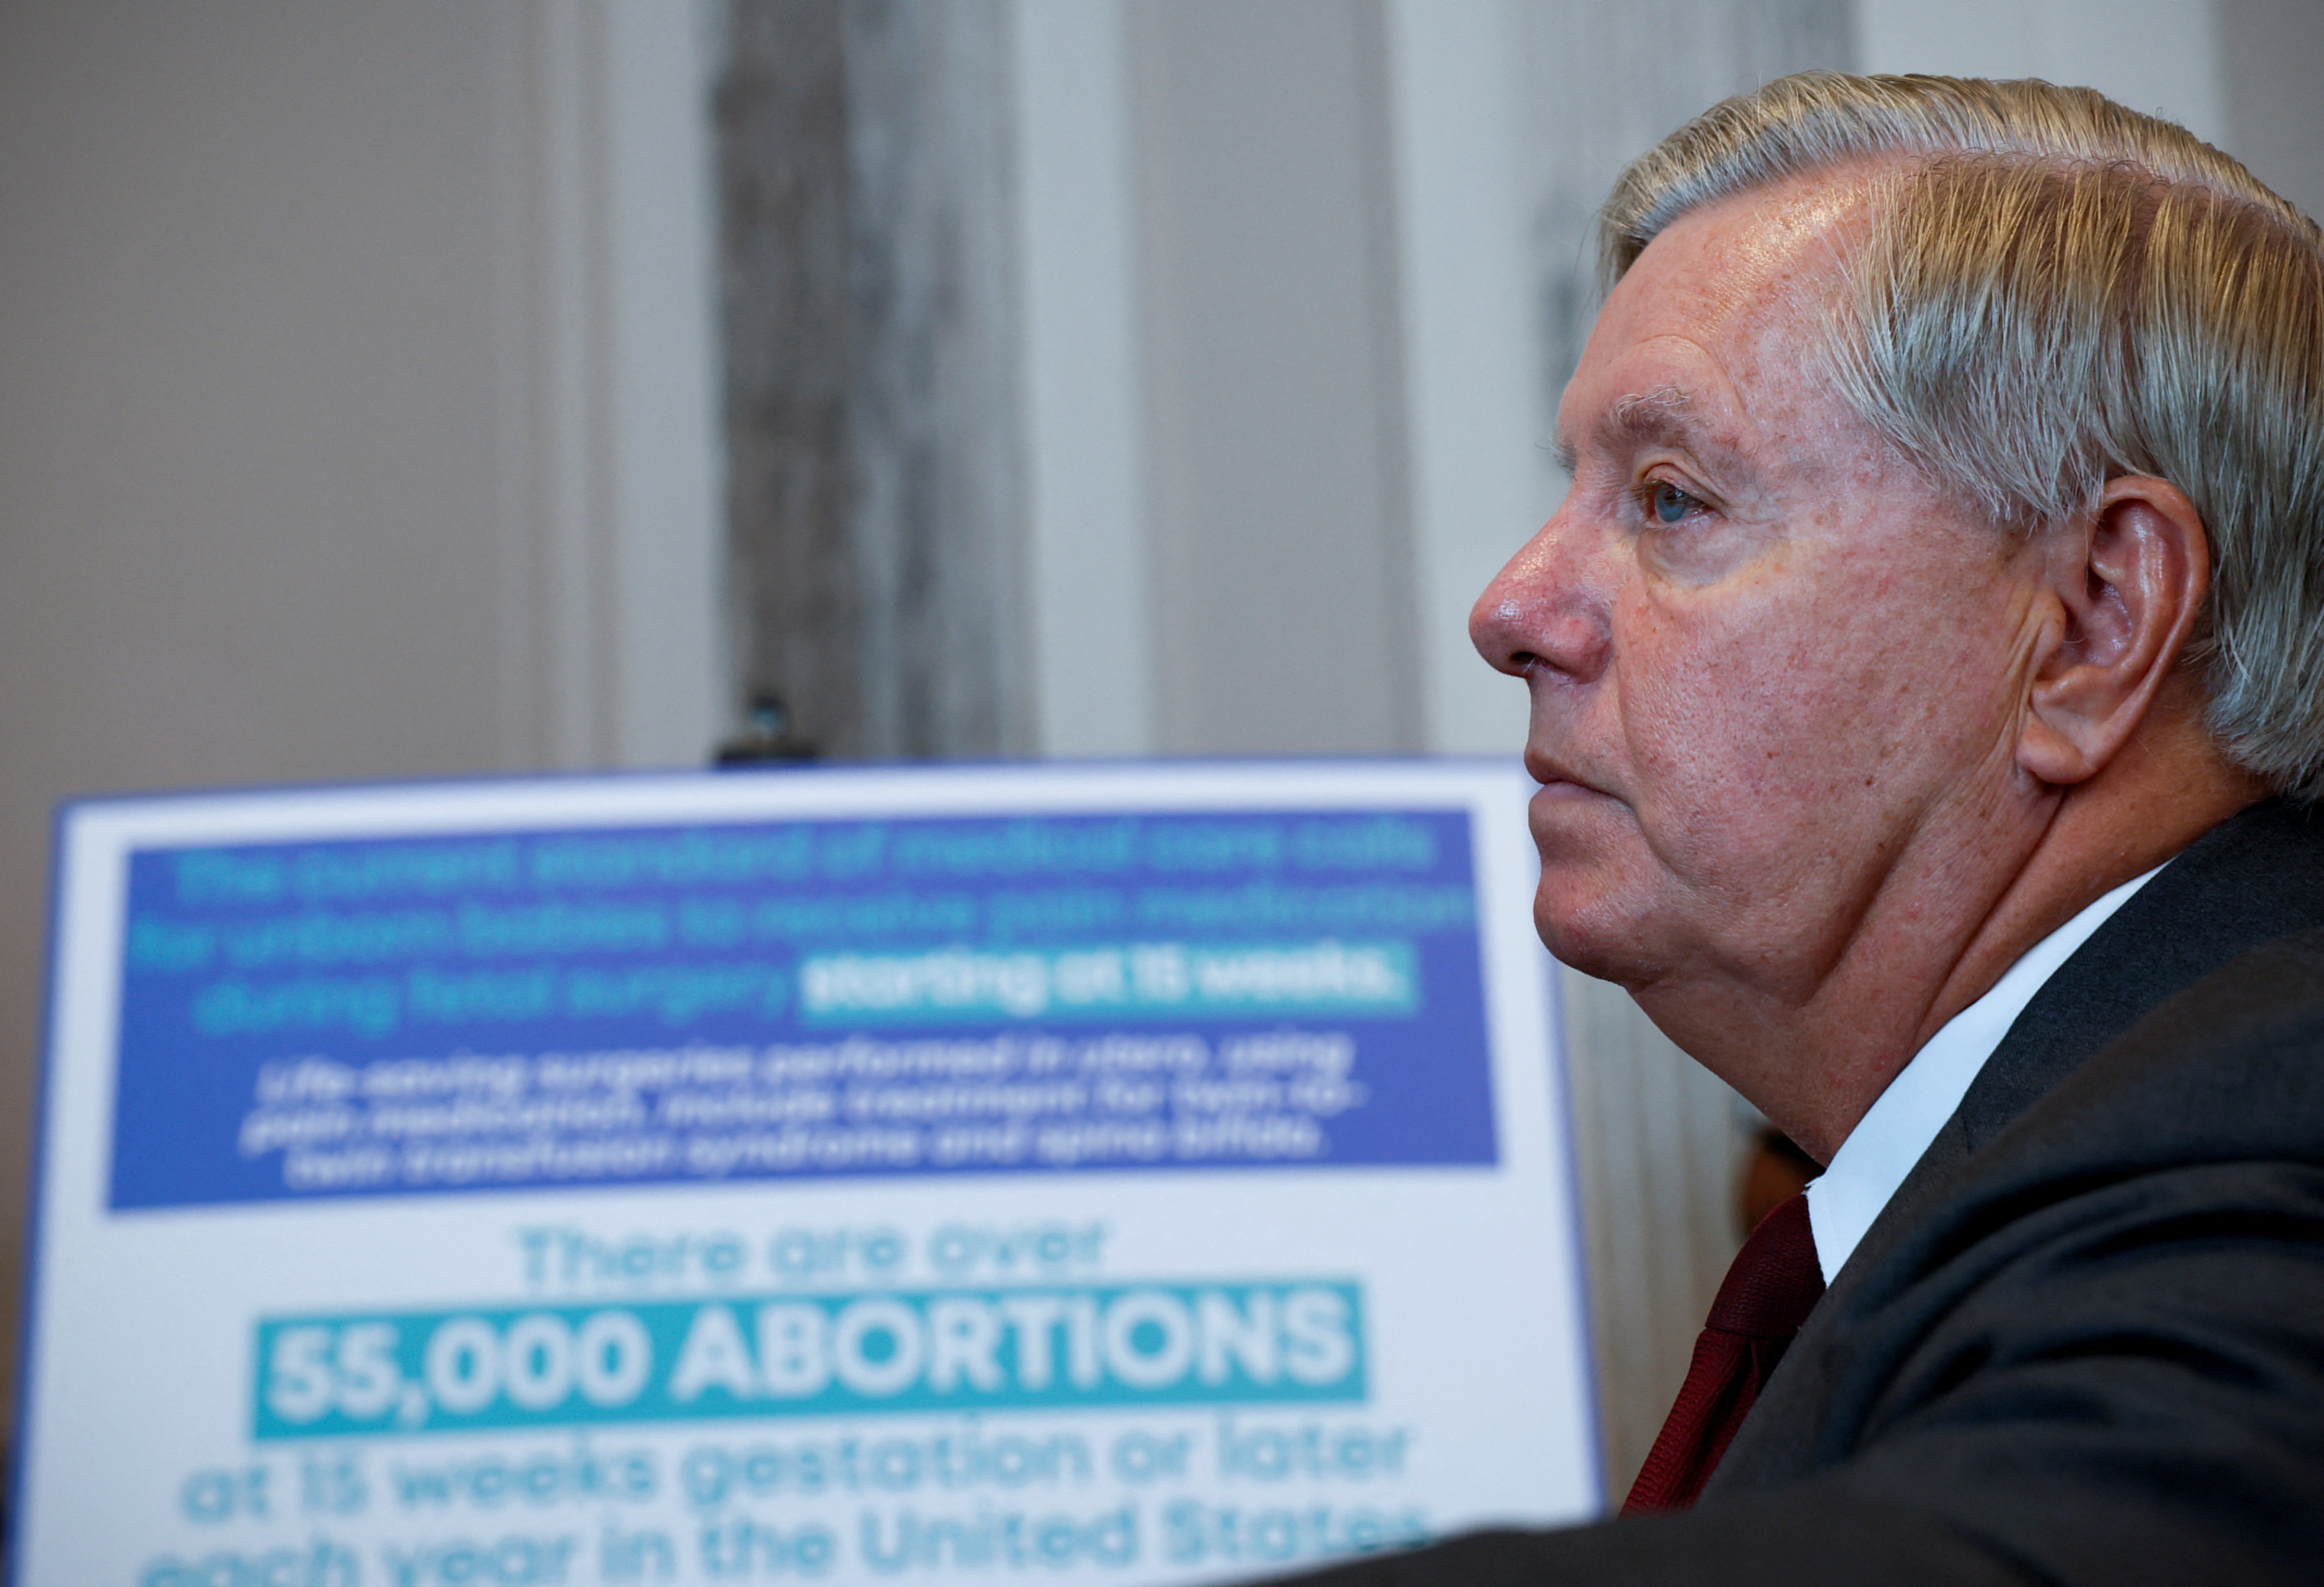 U.S. Senate Republican Lindsey Graham unveils abortion bill ahead of midterms in Washington